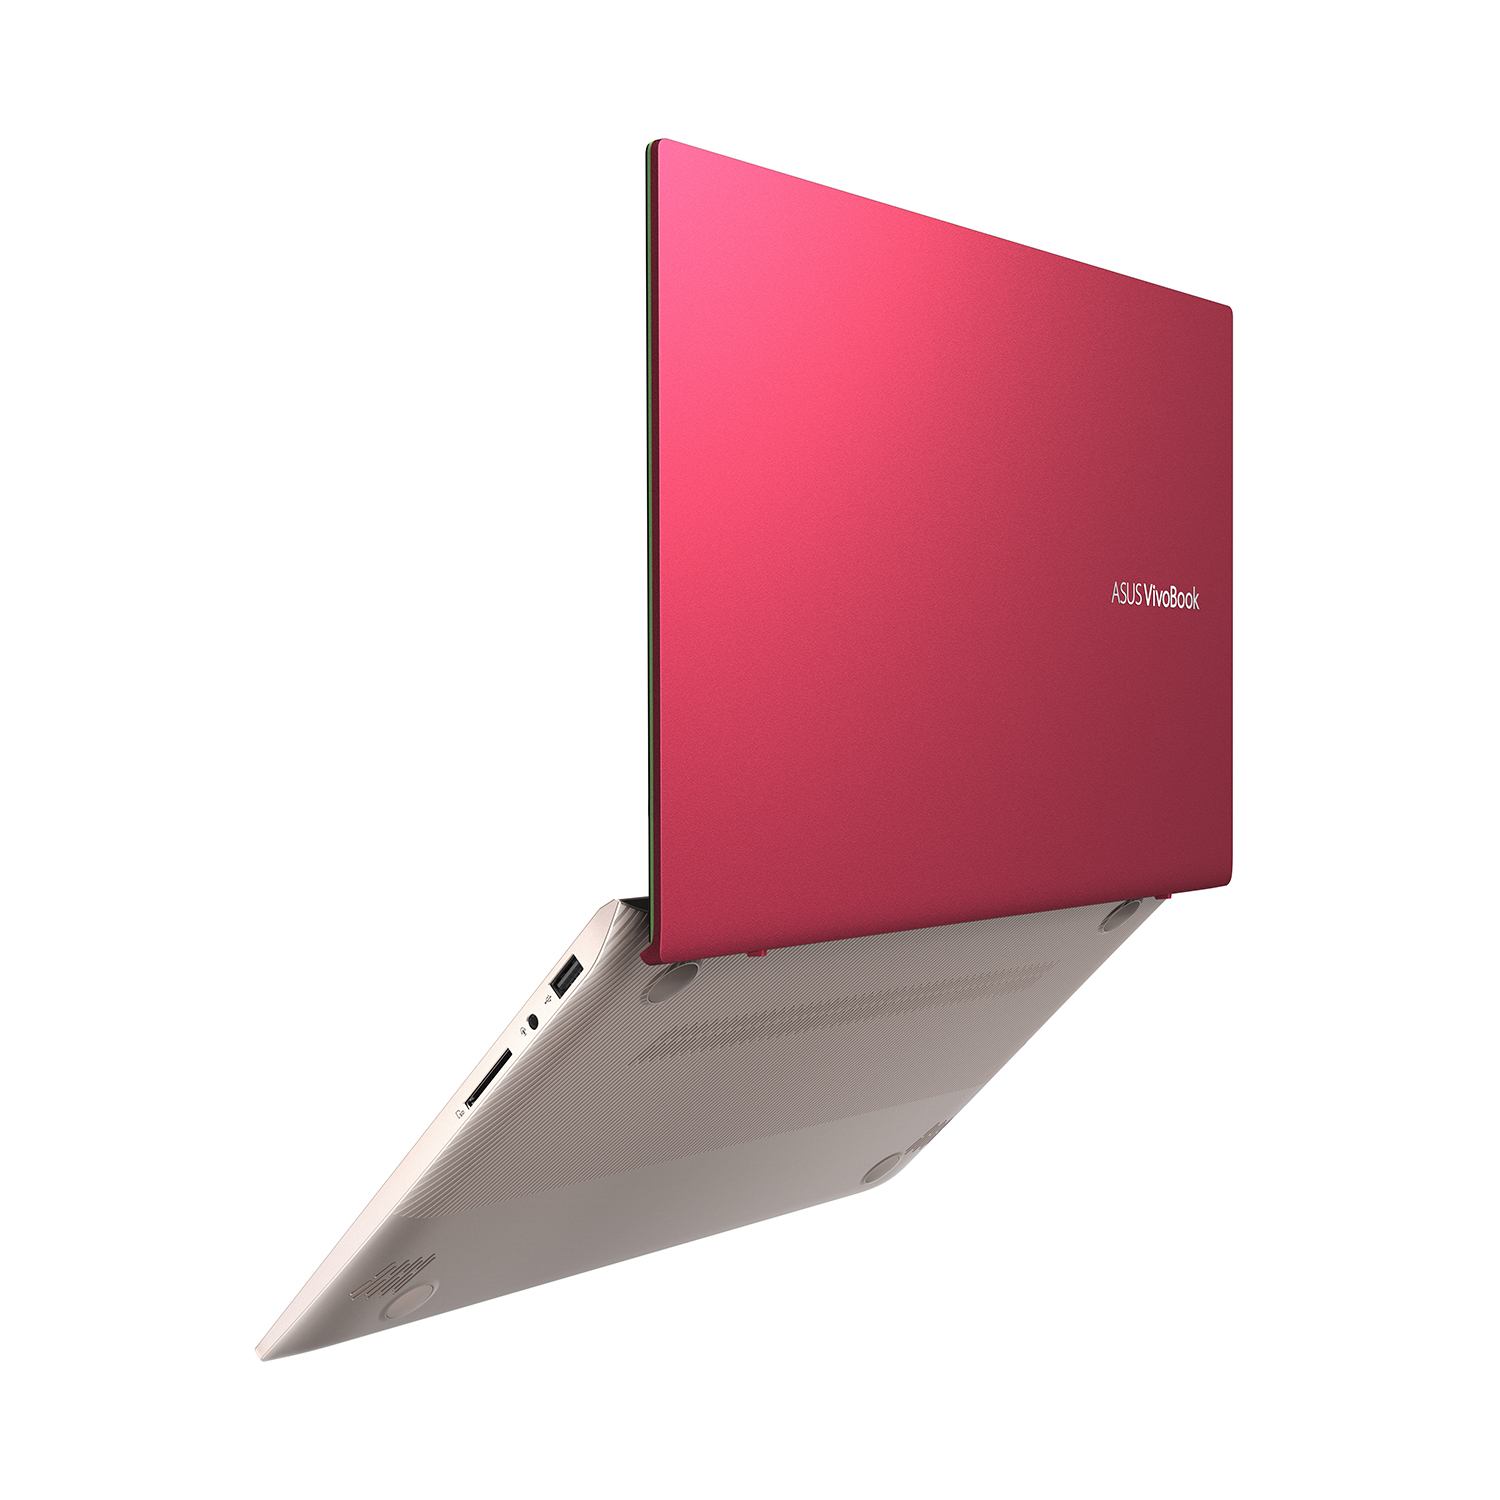 Laptop Asus VivoBook S431FA-EB525T (i5 10210U/8GB RAM/512GB SSD/14 inch FHD/Win 10/Hồng)